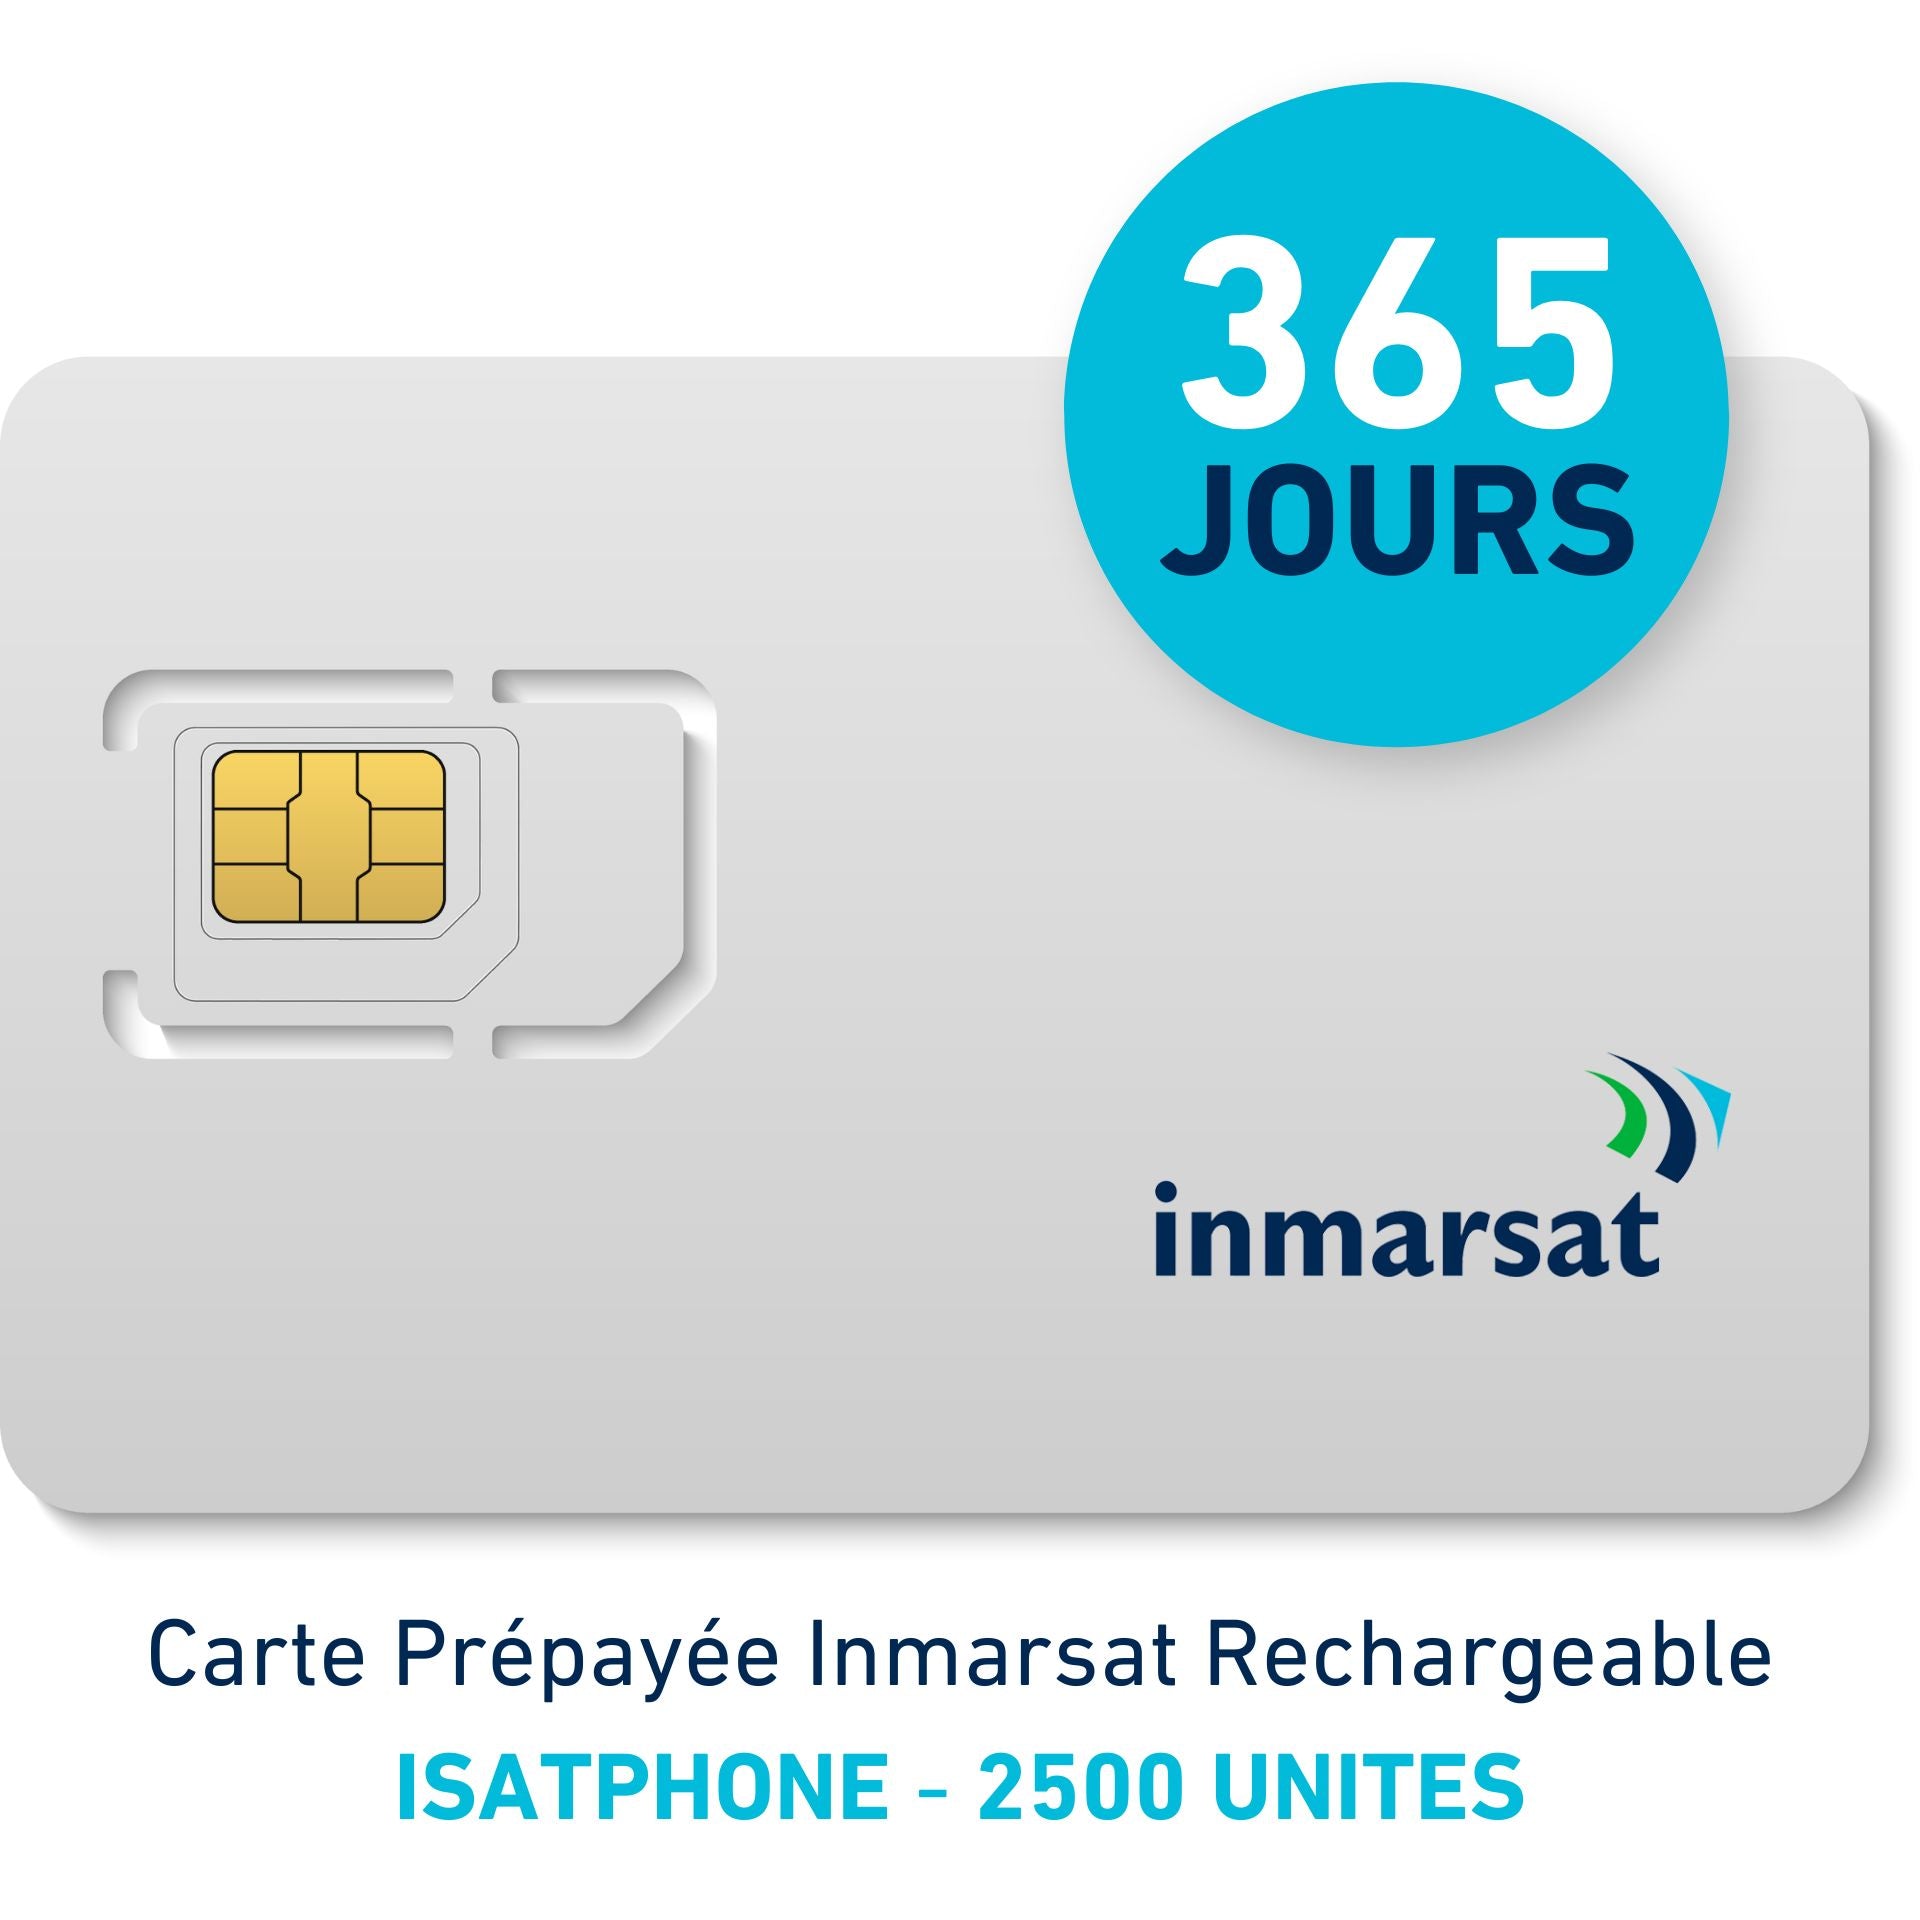 Carte Prépayée INMARSAT Rechargeable ISATPHONE - 2500 UNITES - 365 JOURS